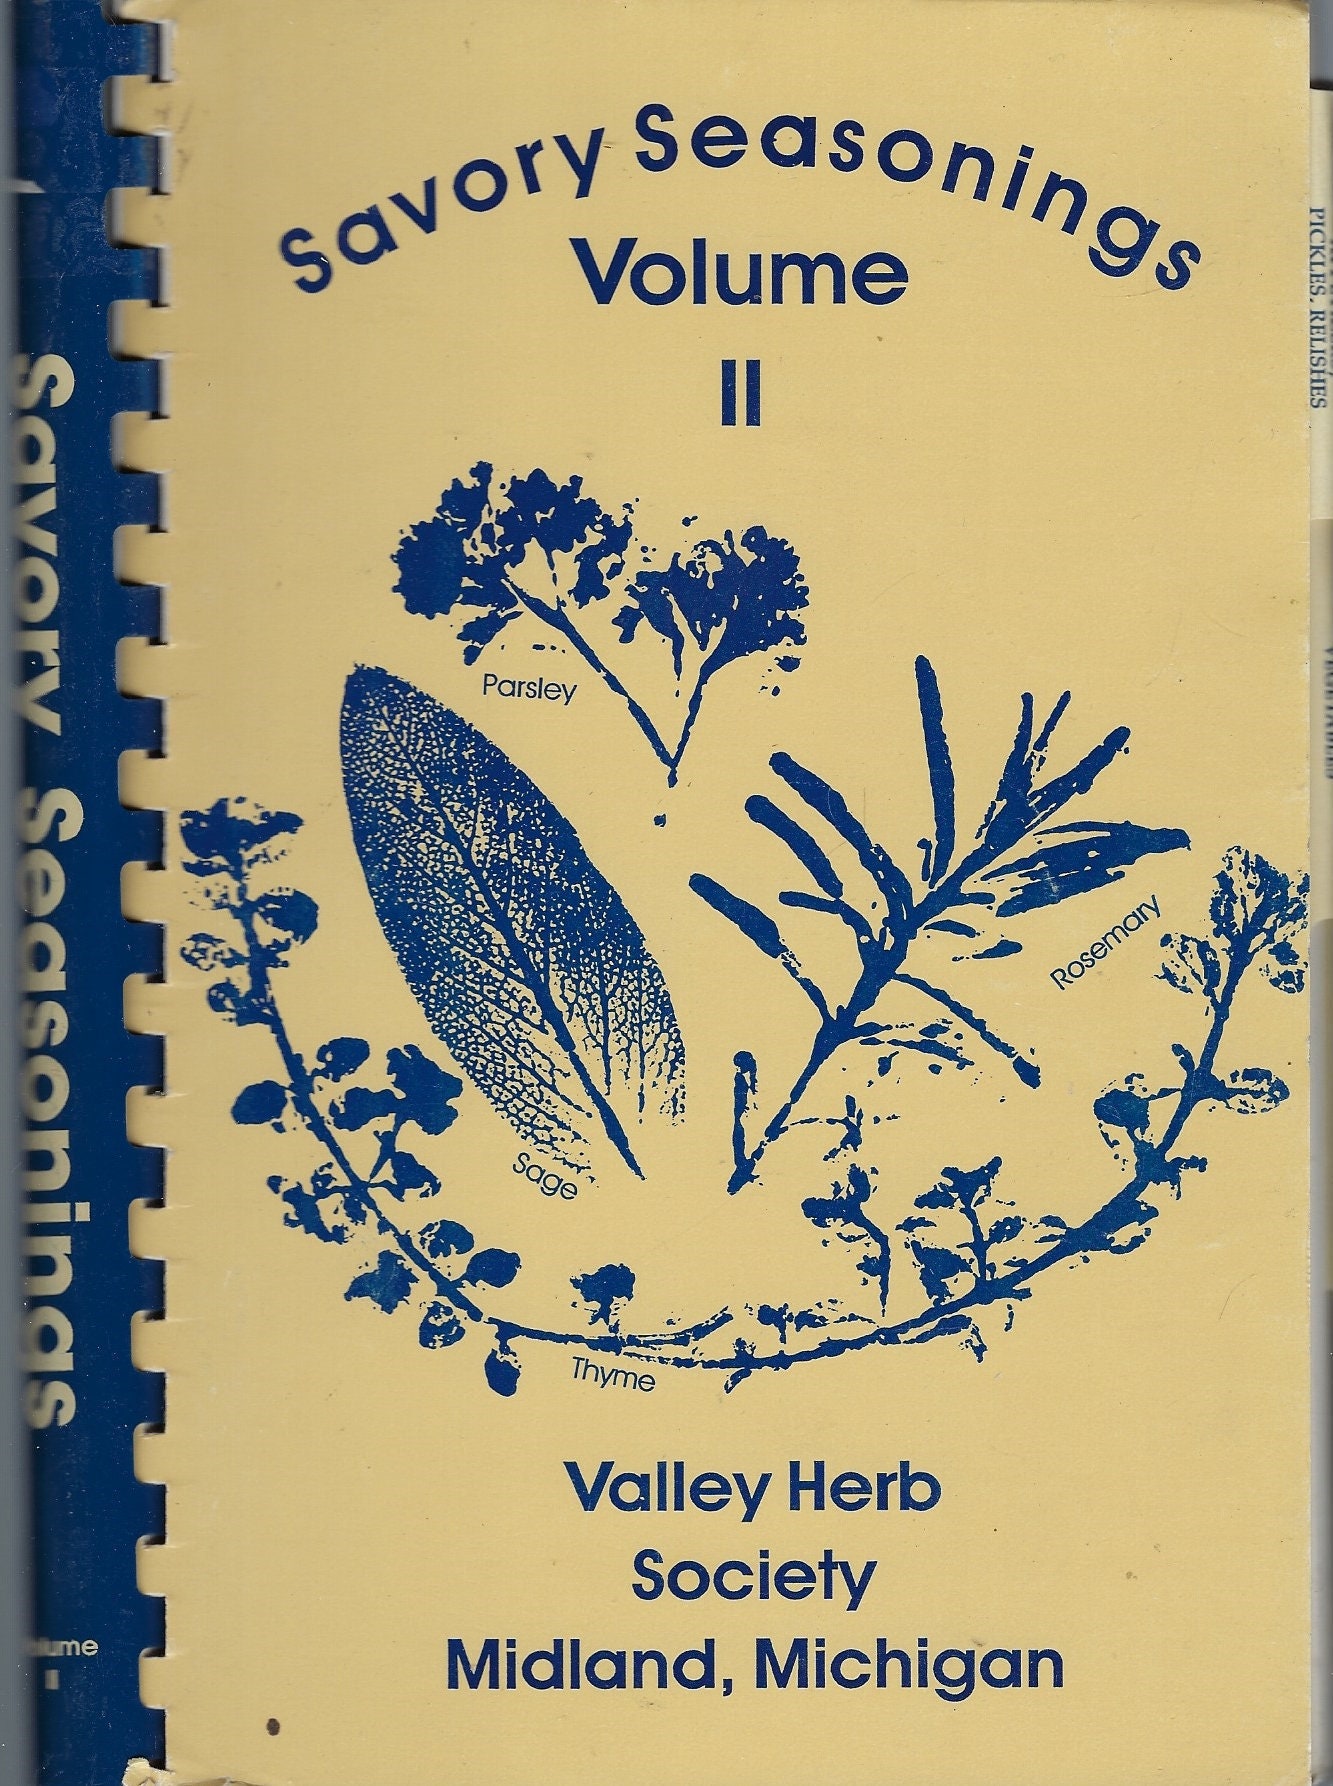 Midland Michigan Vintage 1989 Valley Herb Society Savory Seasonings Volume Ii Cookbook Mi Community Favorite Recipes Collectable Souvenir